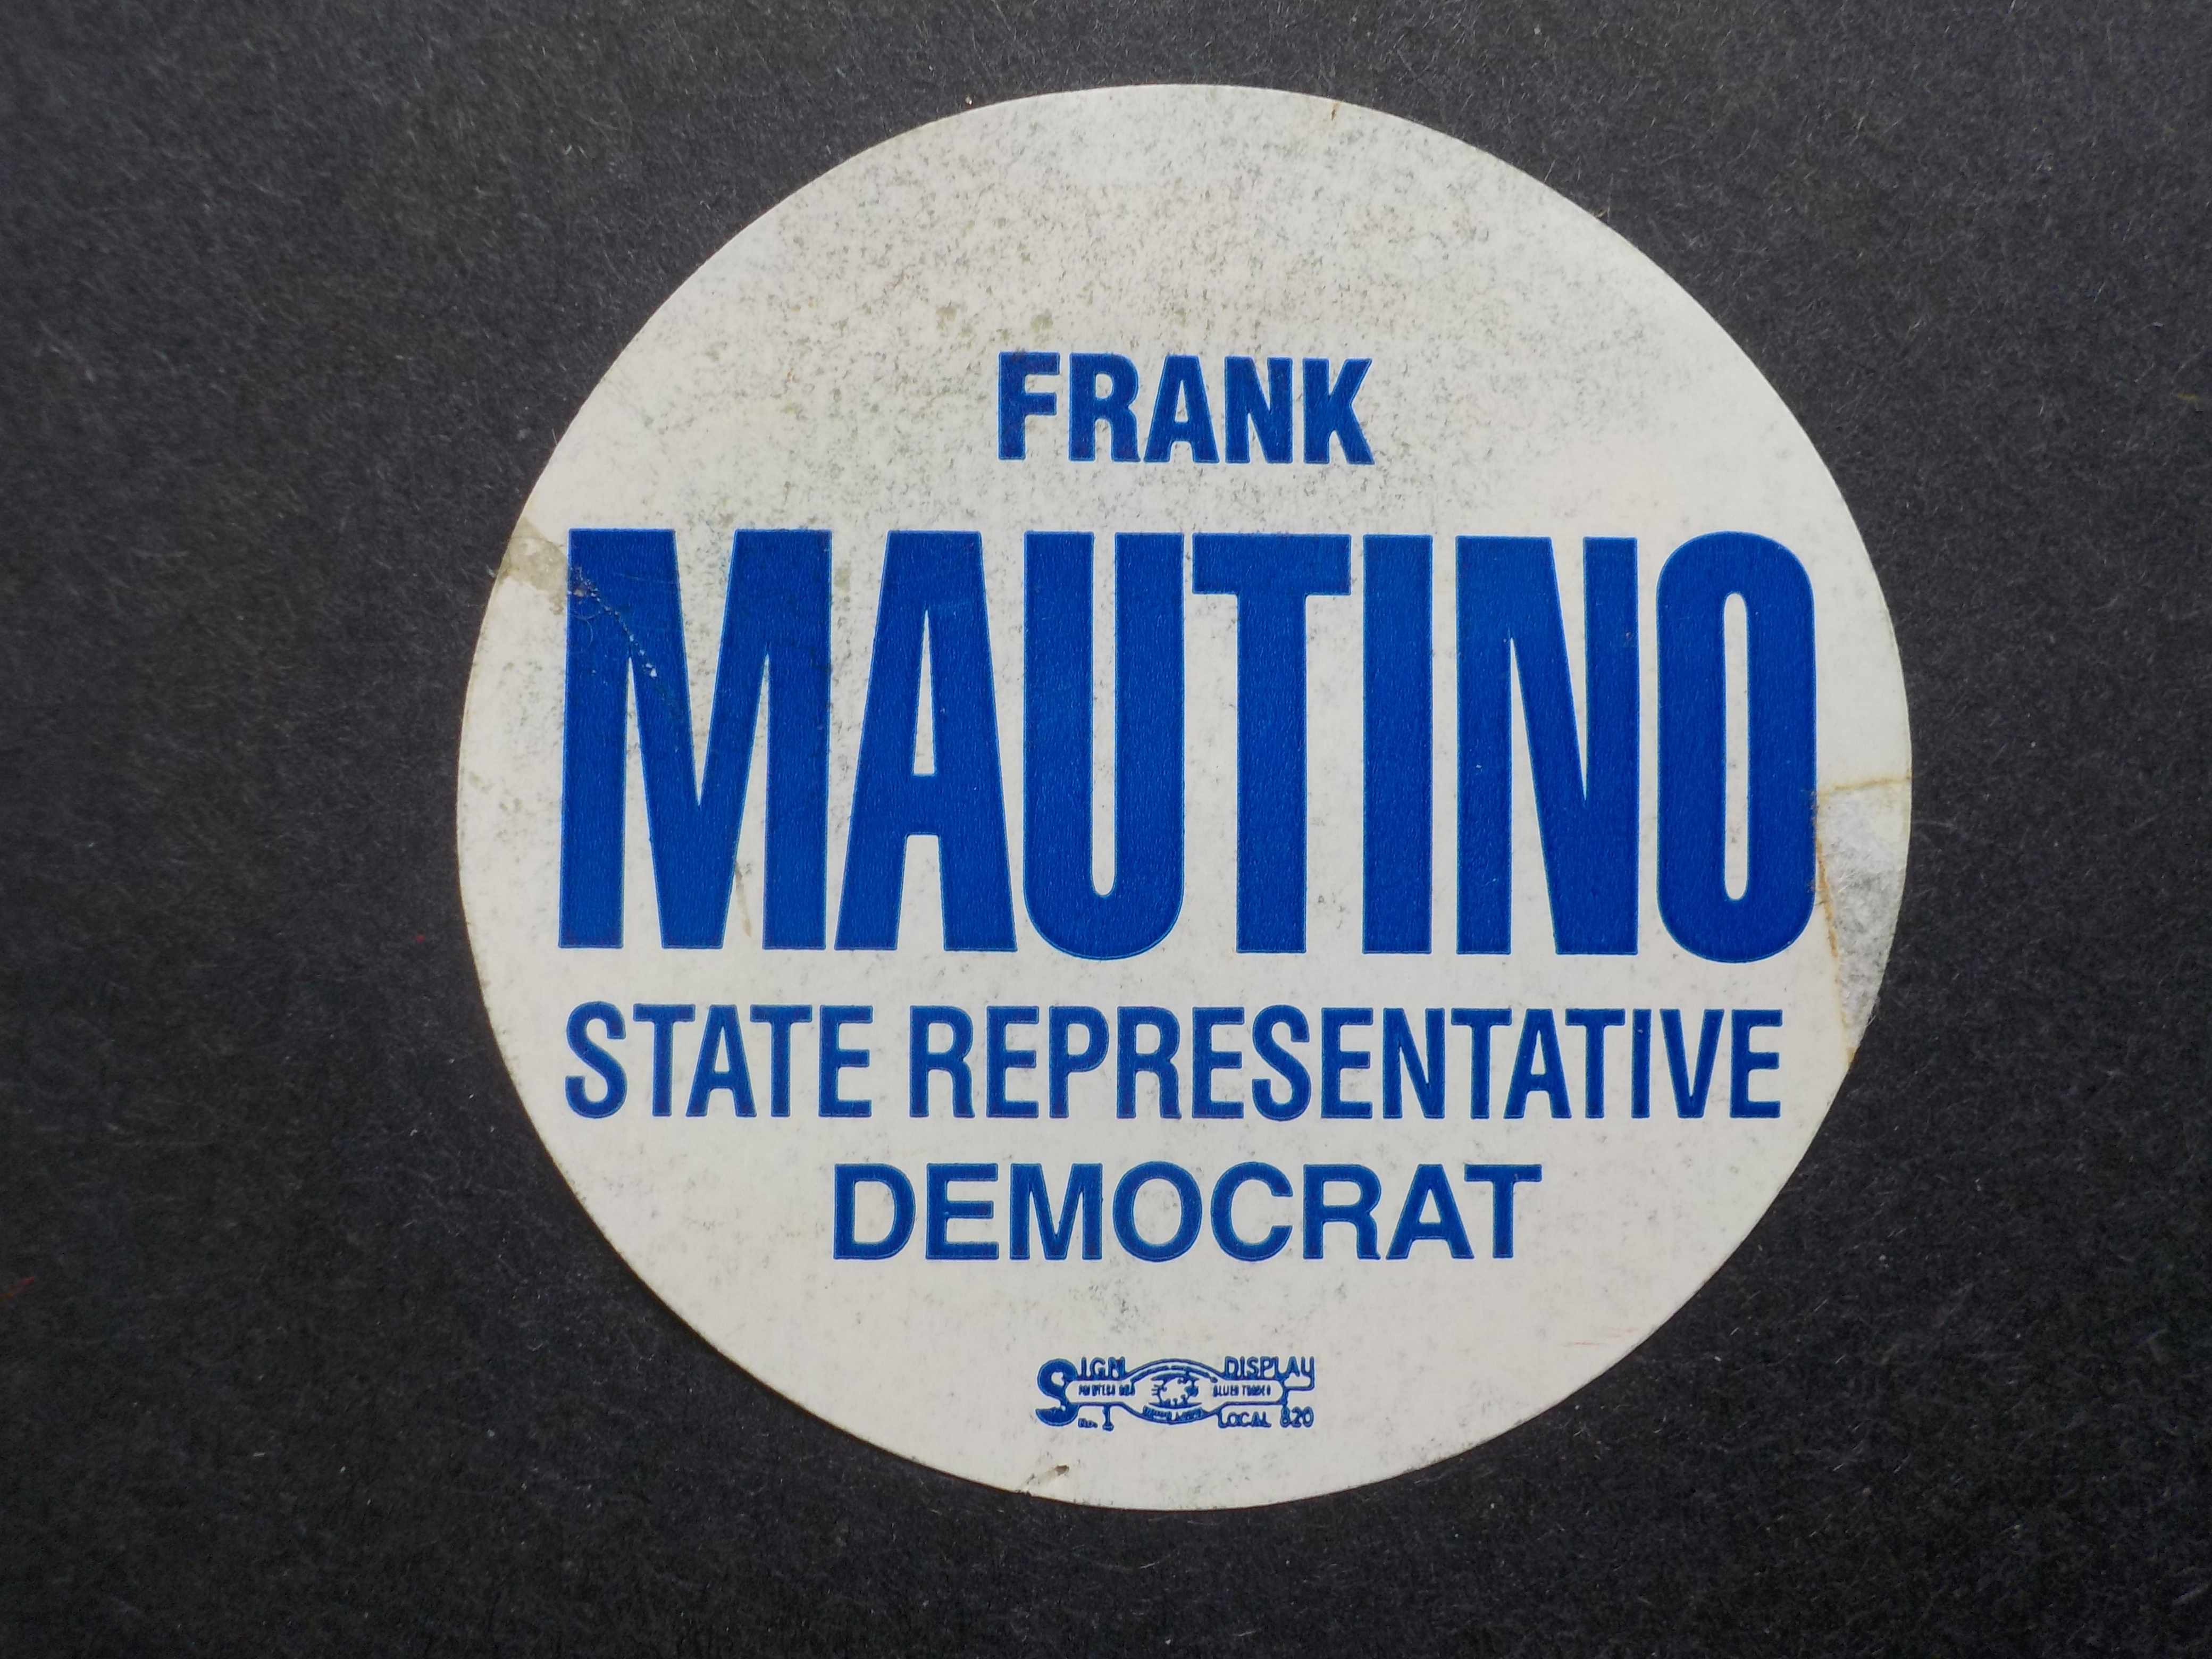 Frank Mautino